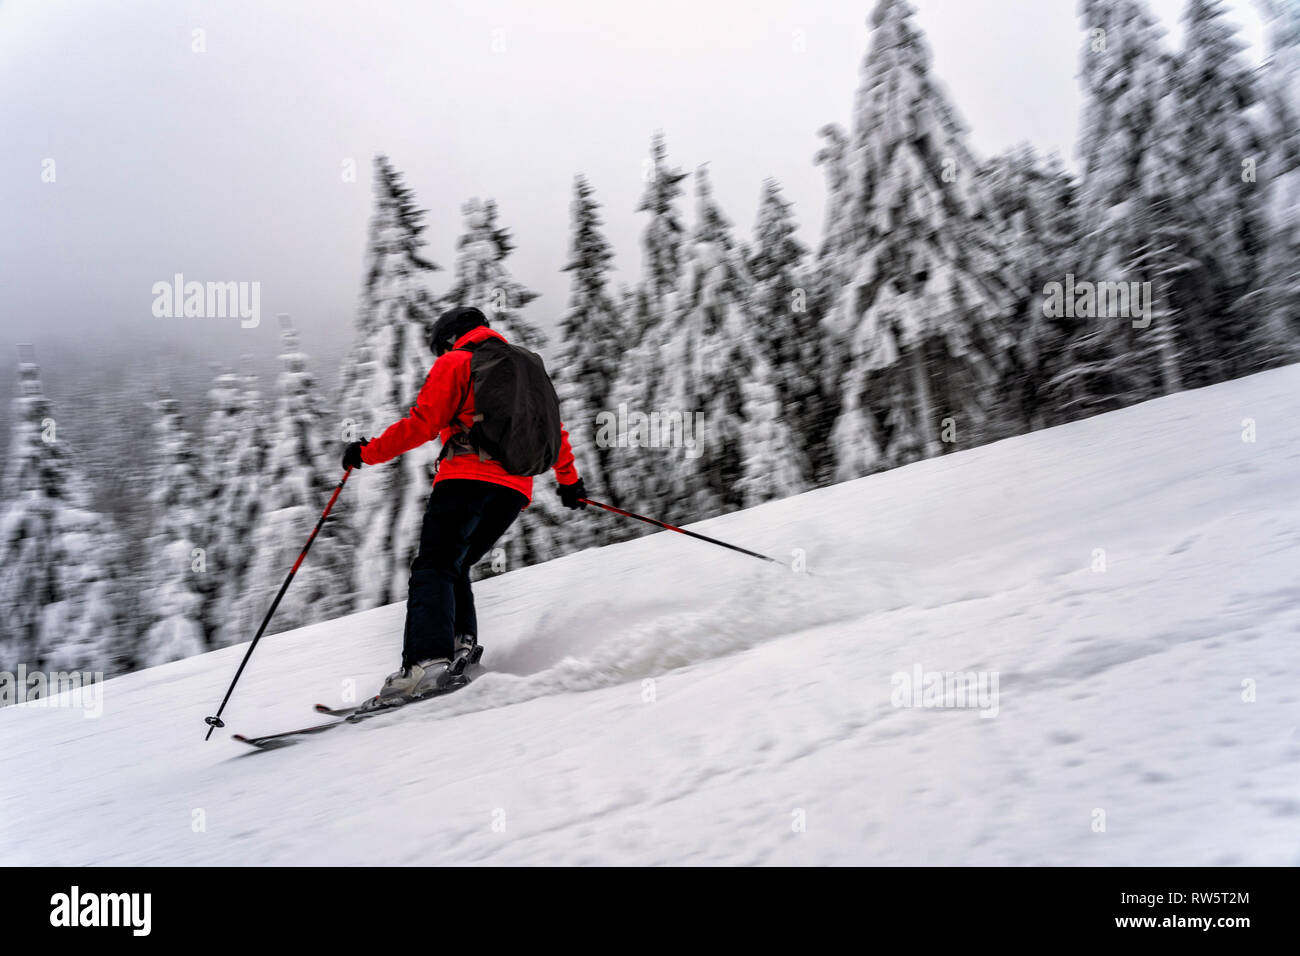 Female skier dressed in red jacket on ski slope. Stock Photo